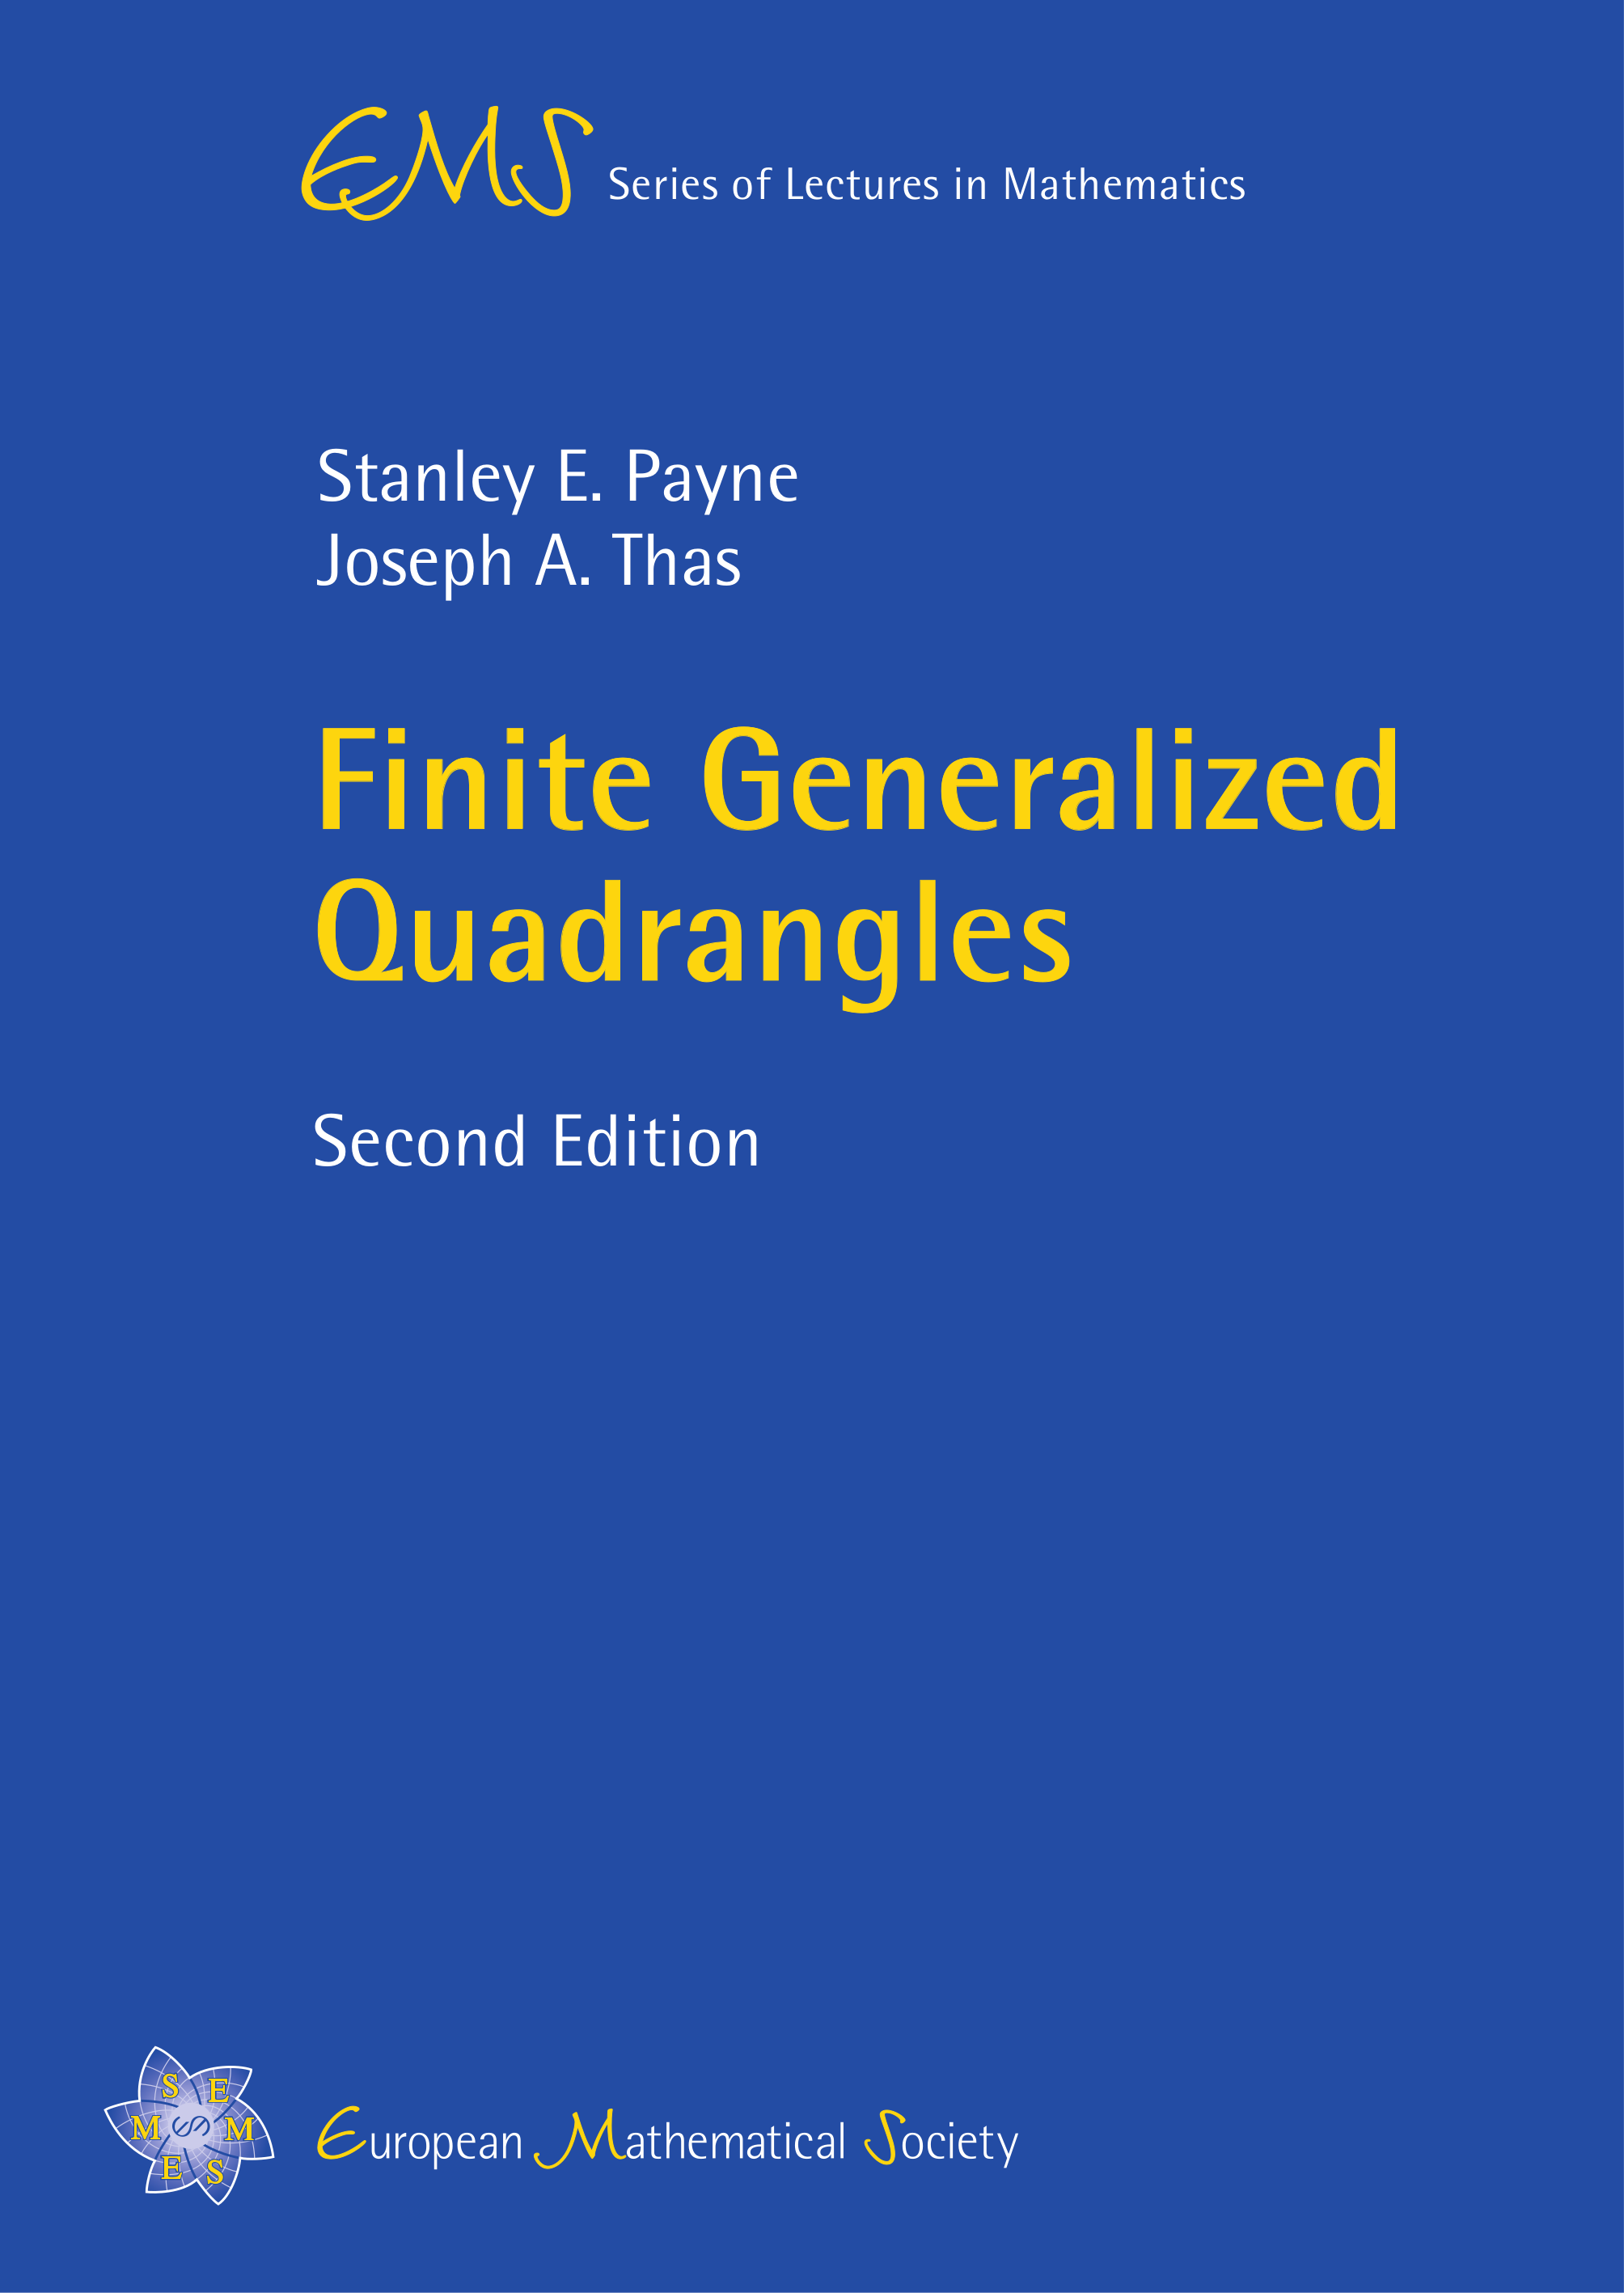 Elation generalized quadrangles and translation generalized quadrangles cover